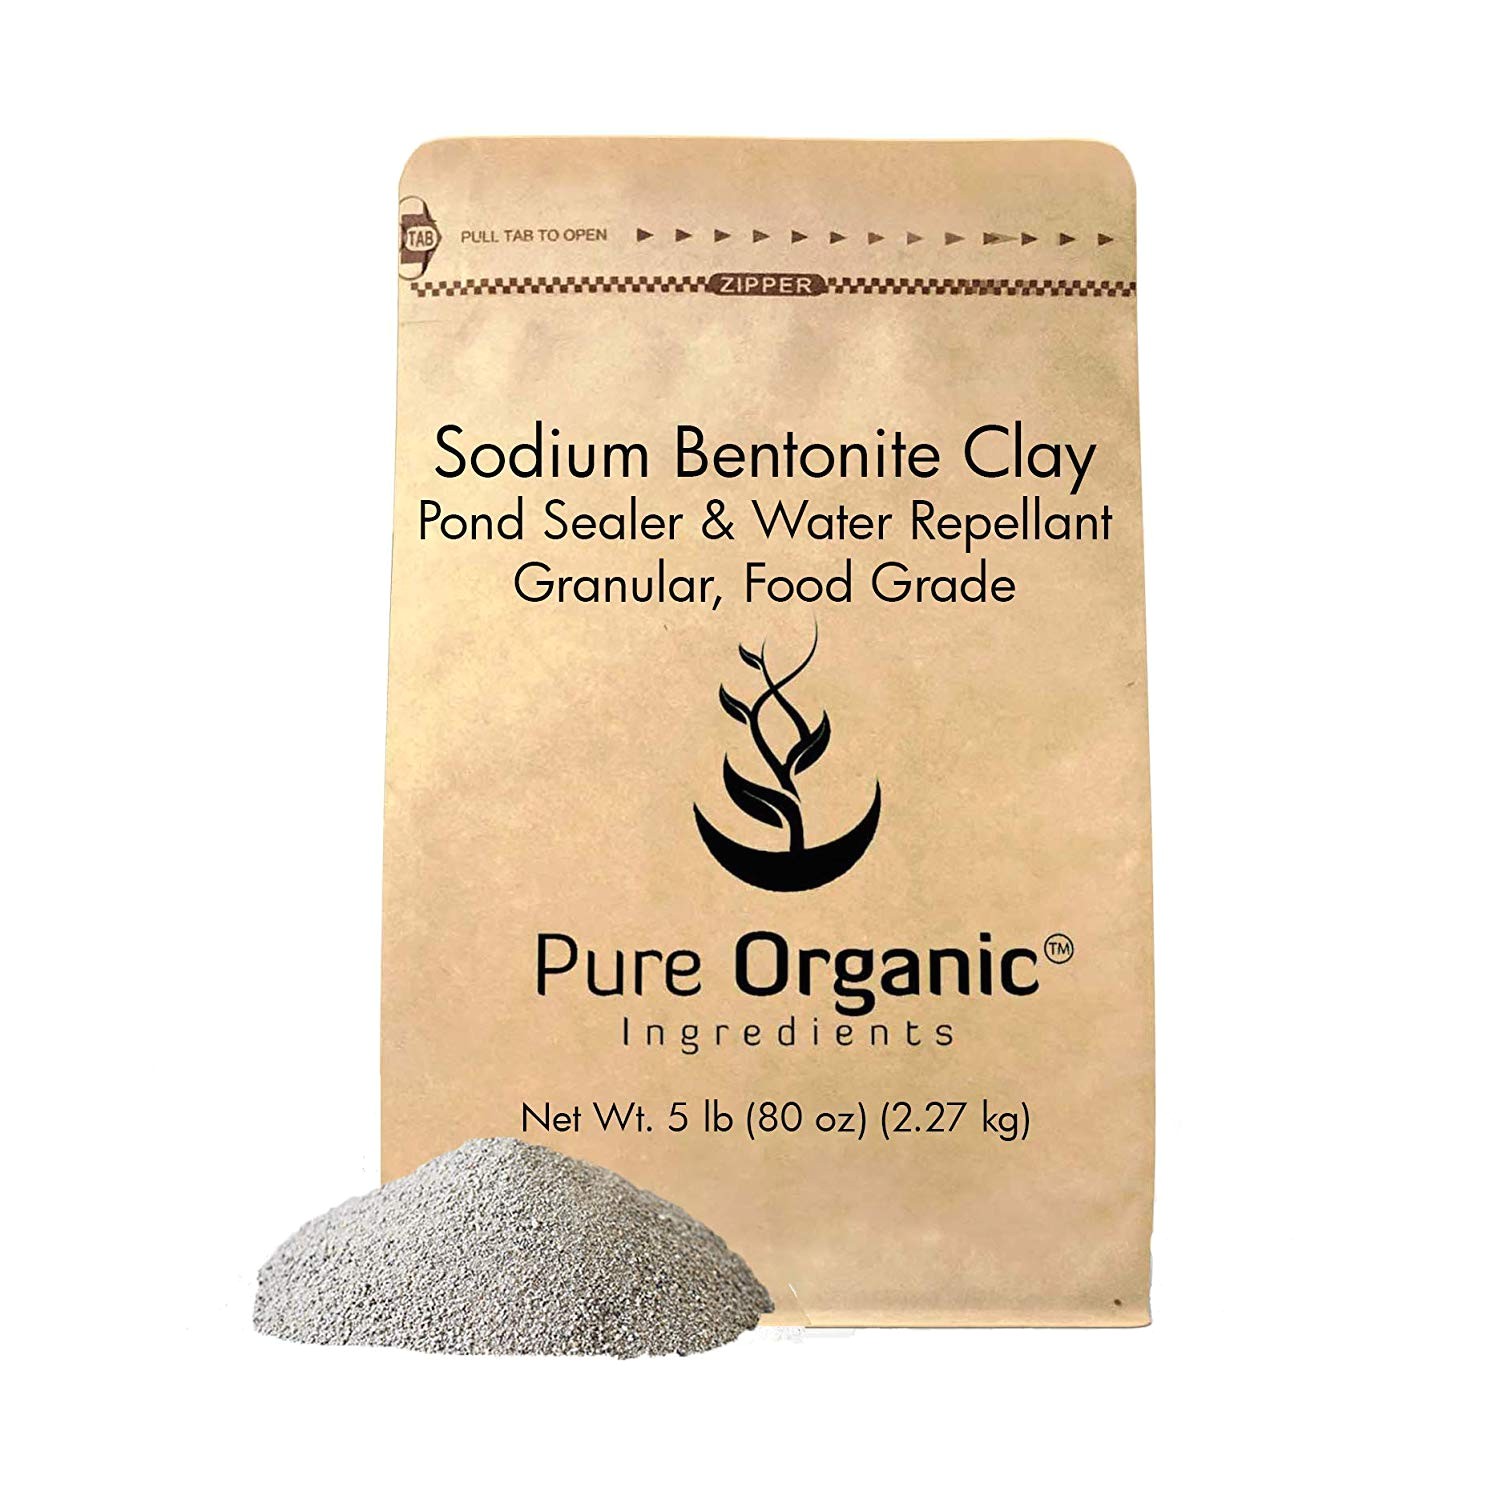 amazon com granular sodium bentonite clay 5 lb 80 oz by pure organic ingredients eco friendly packaging for pond sealing garden outdoor